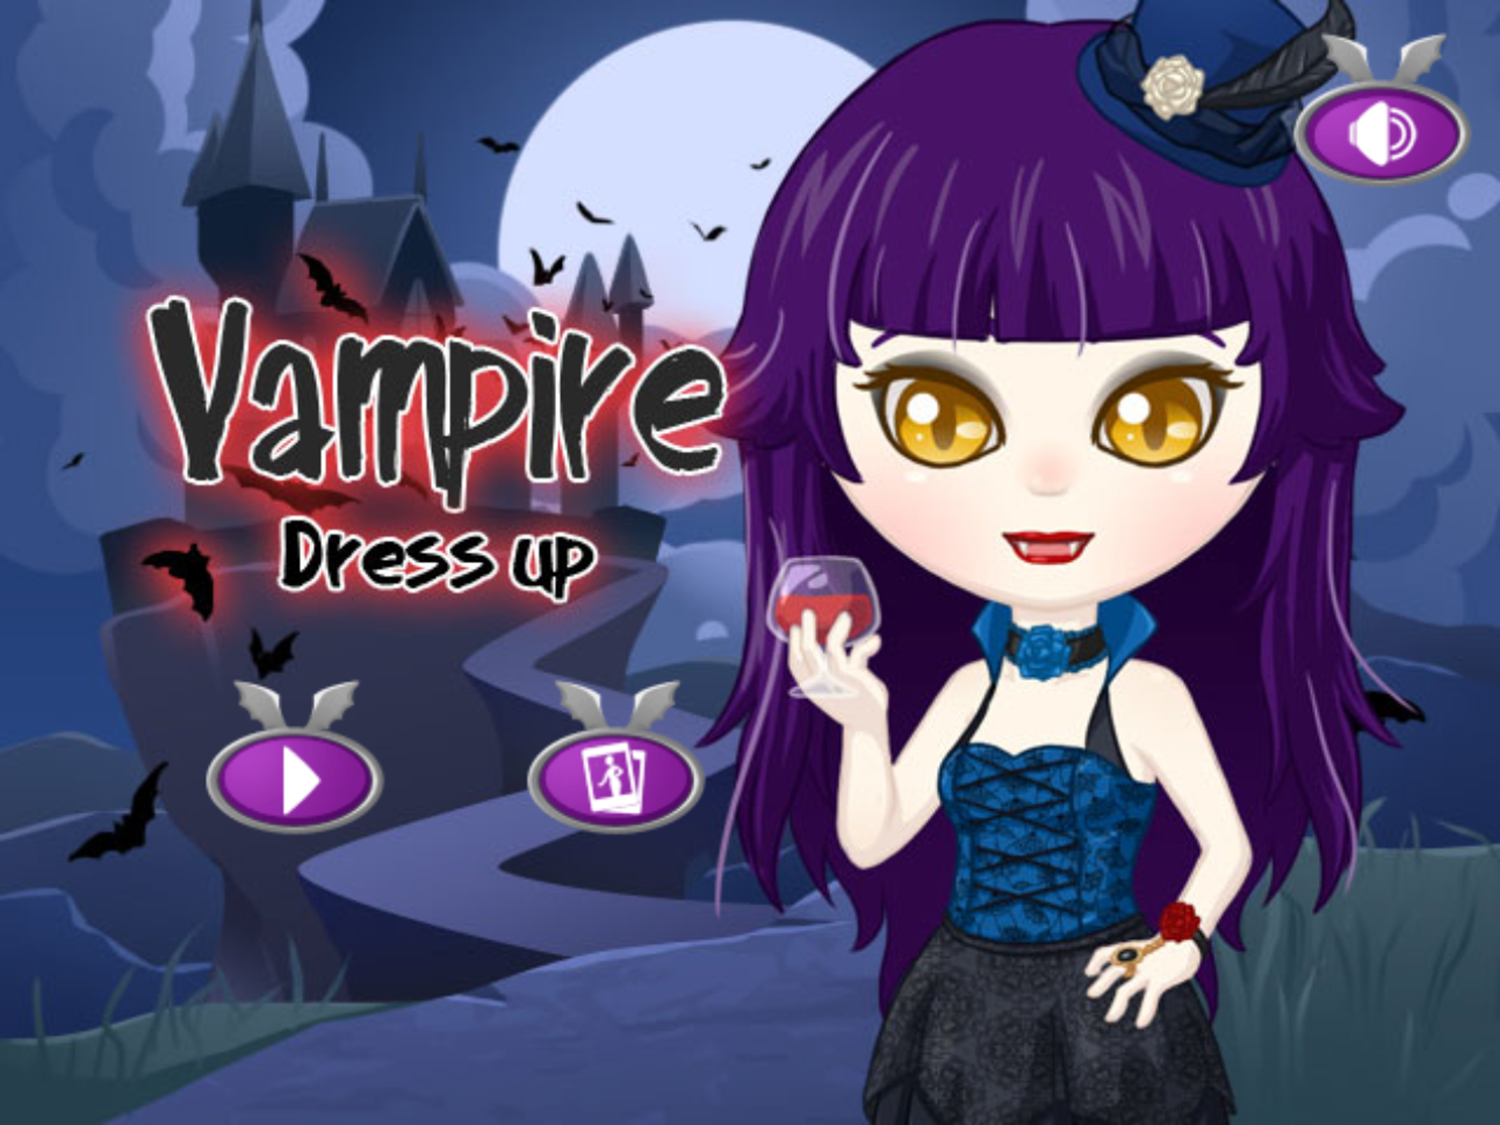 Vampire Dress Up Game Welcome Screen Screenshot.